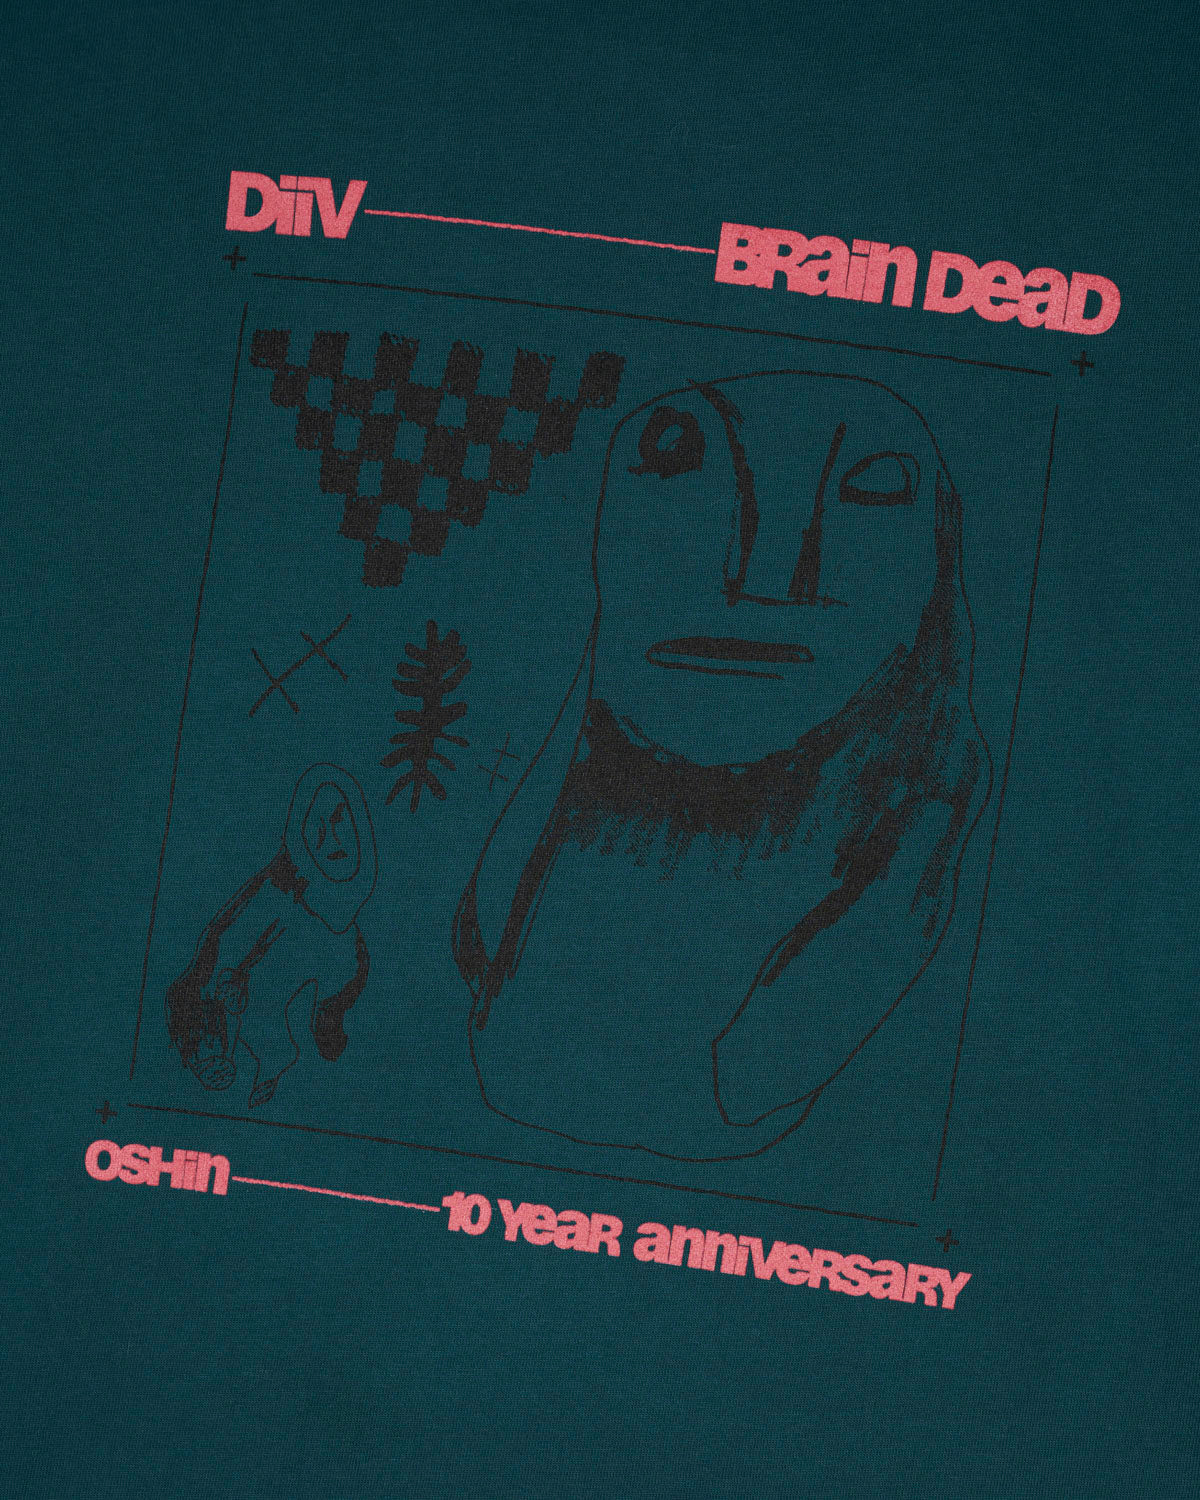 Brain Dead x DIIV "The Oshin" Ten Year Anniversary T-Shirt - Teal 3